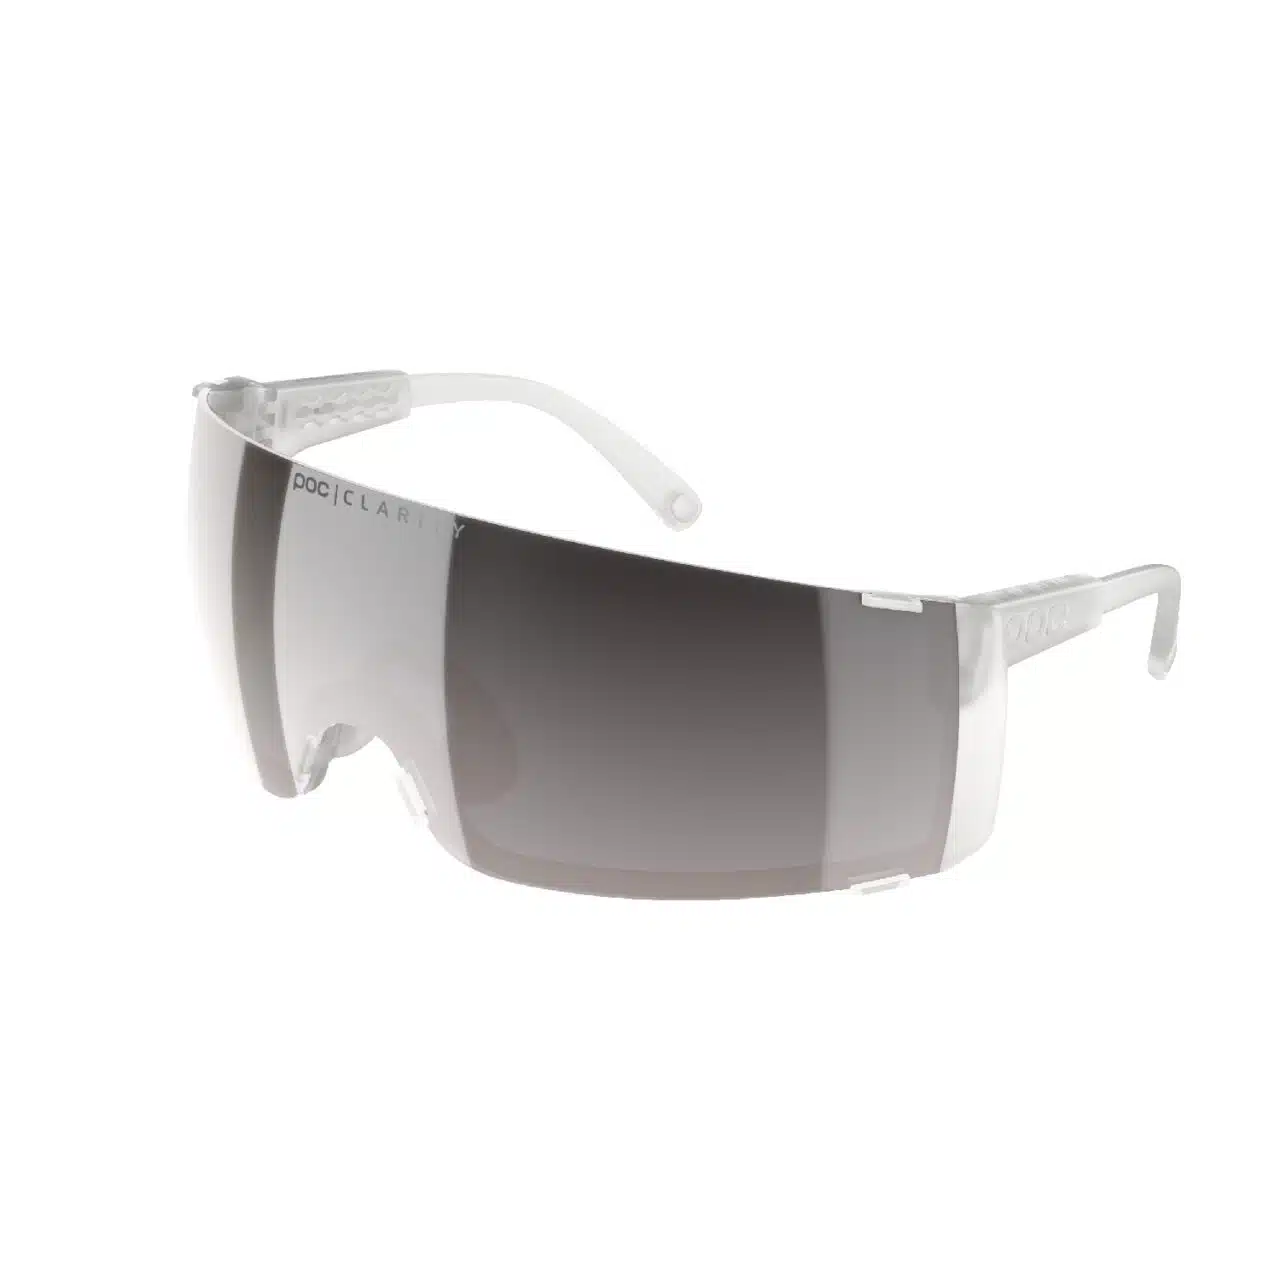 POC Propel Sunglasses Grey translucent